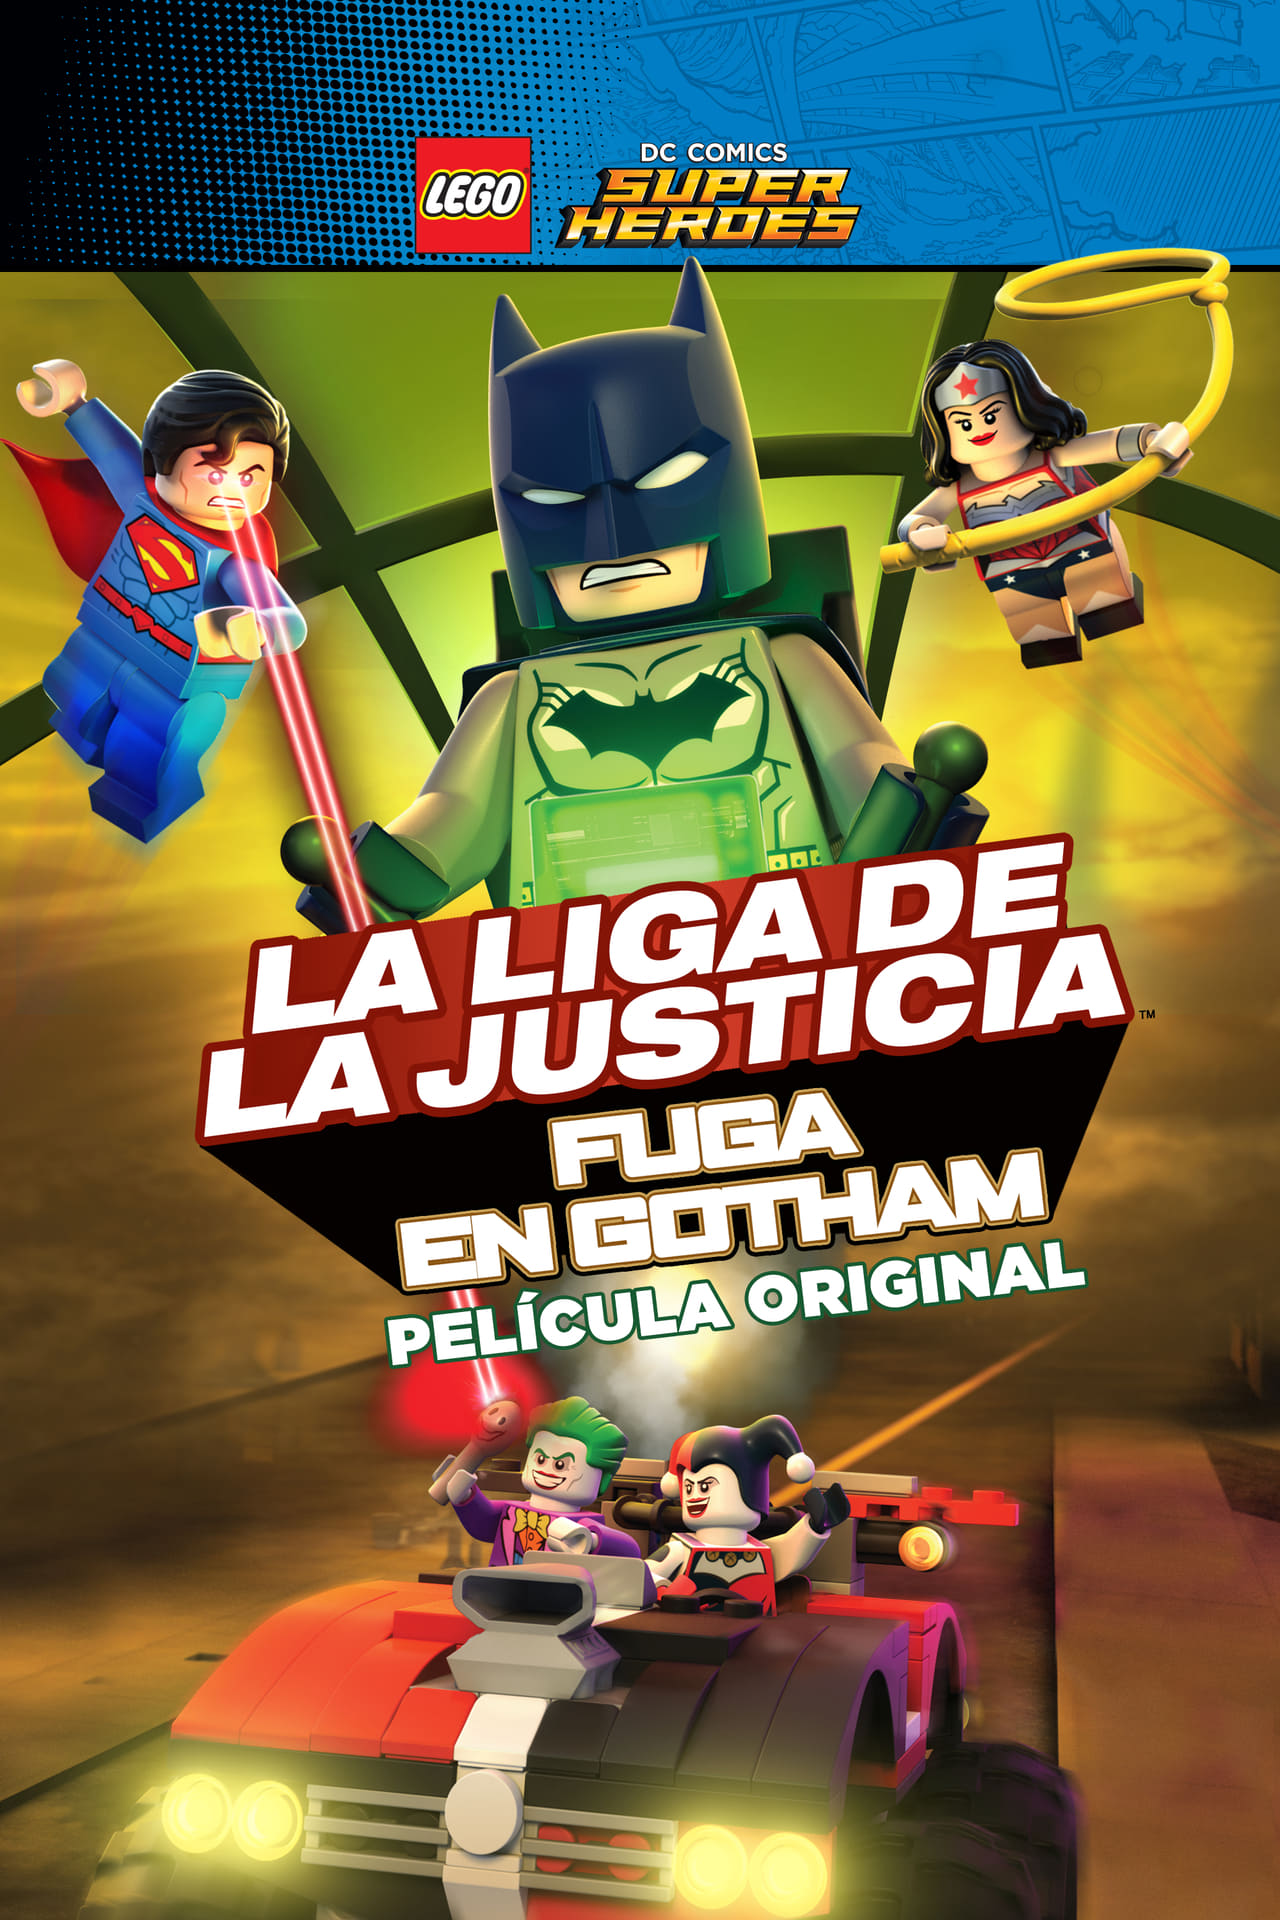 watch lego batman movie online kickasstorrent